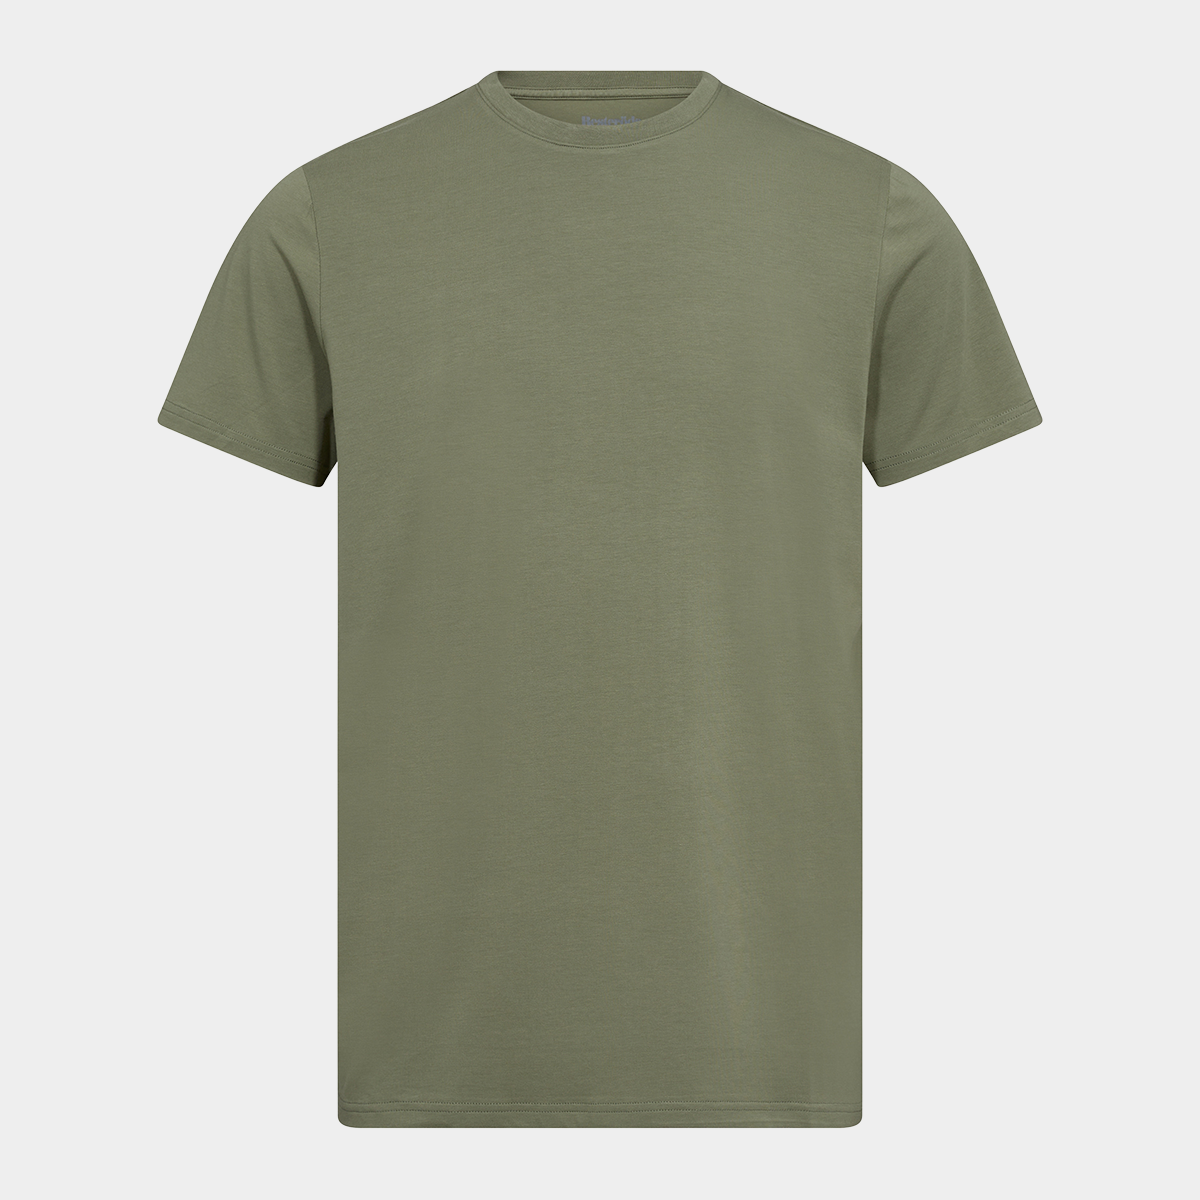 Grøn bambus r-neck t-shirt til herre fra Resteröds, XL